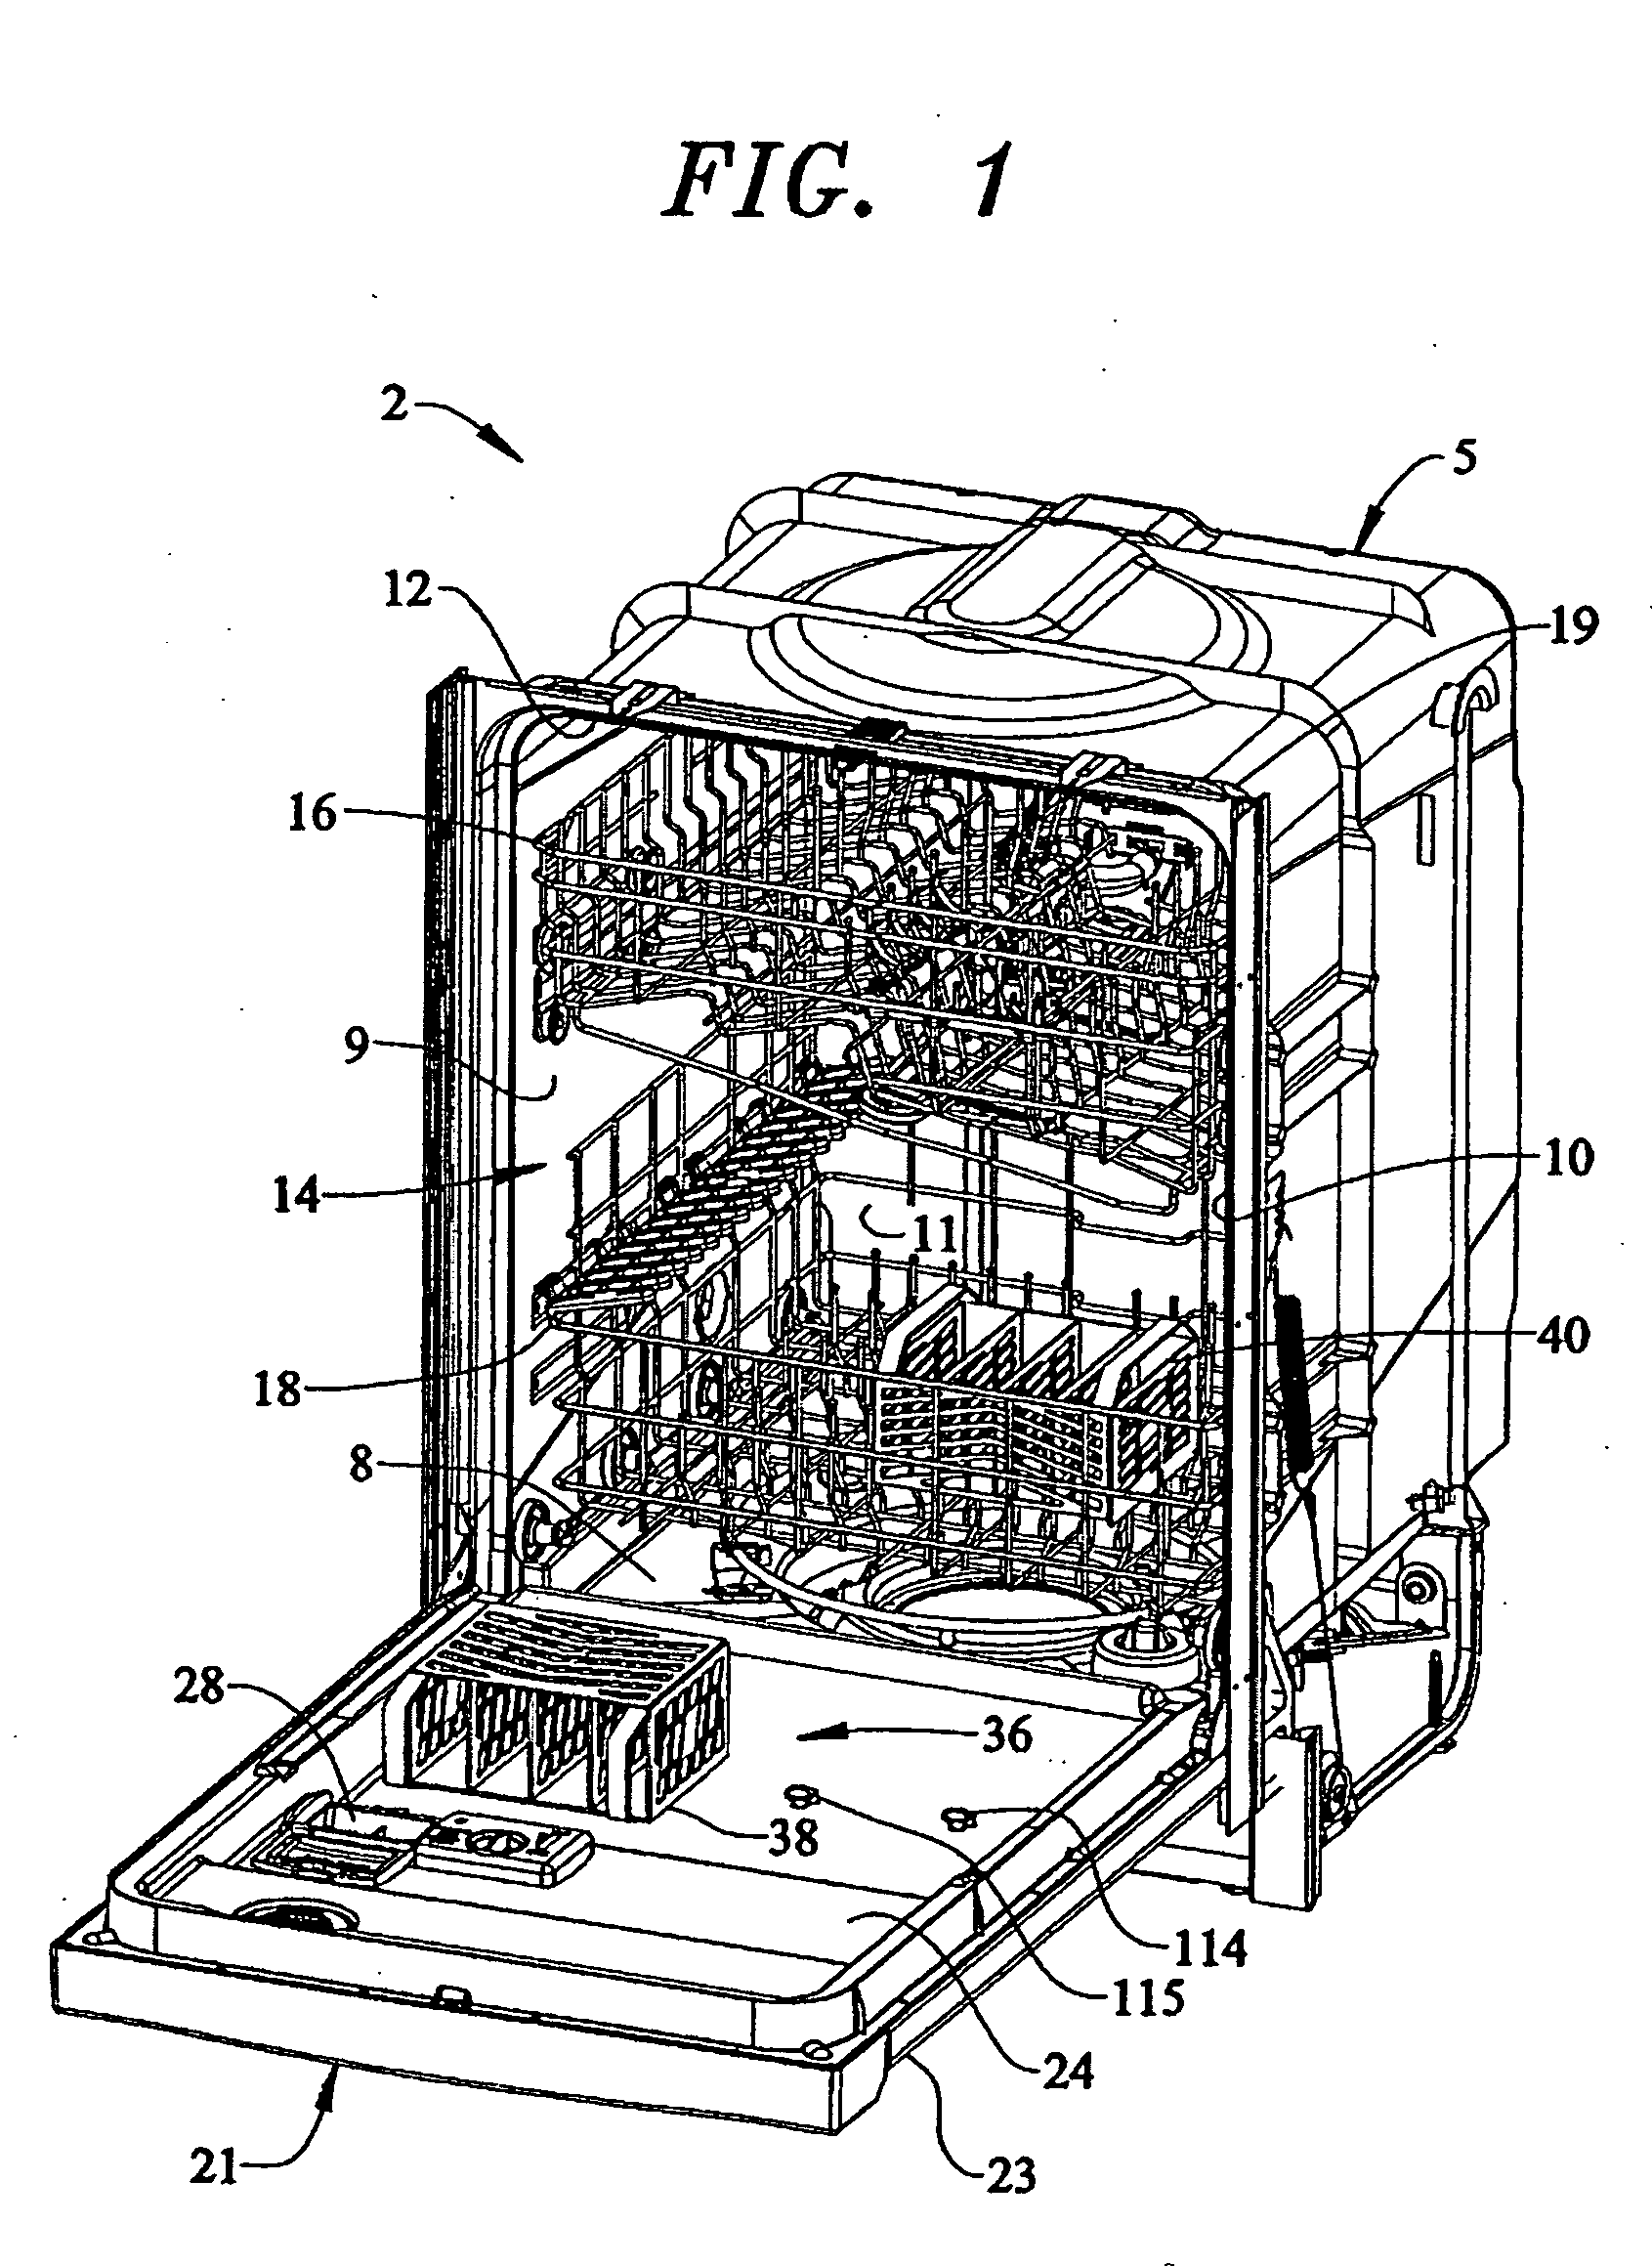 Utensil holder assembly for a dishwasher